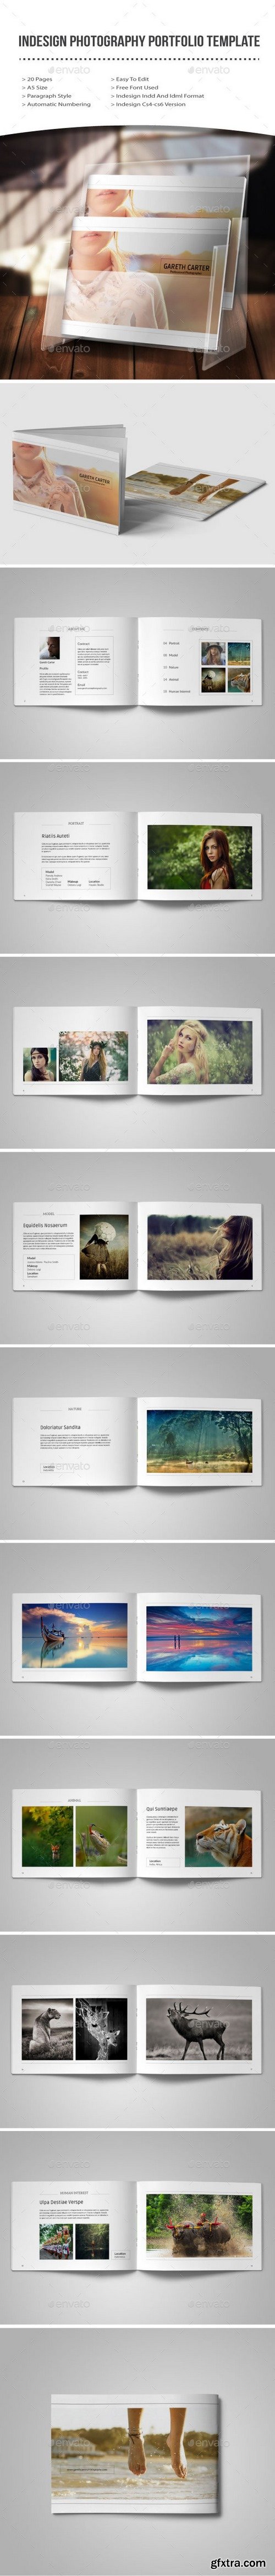 Graphicriver - indesign photography portfolio template 12695050